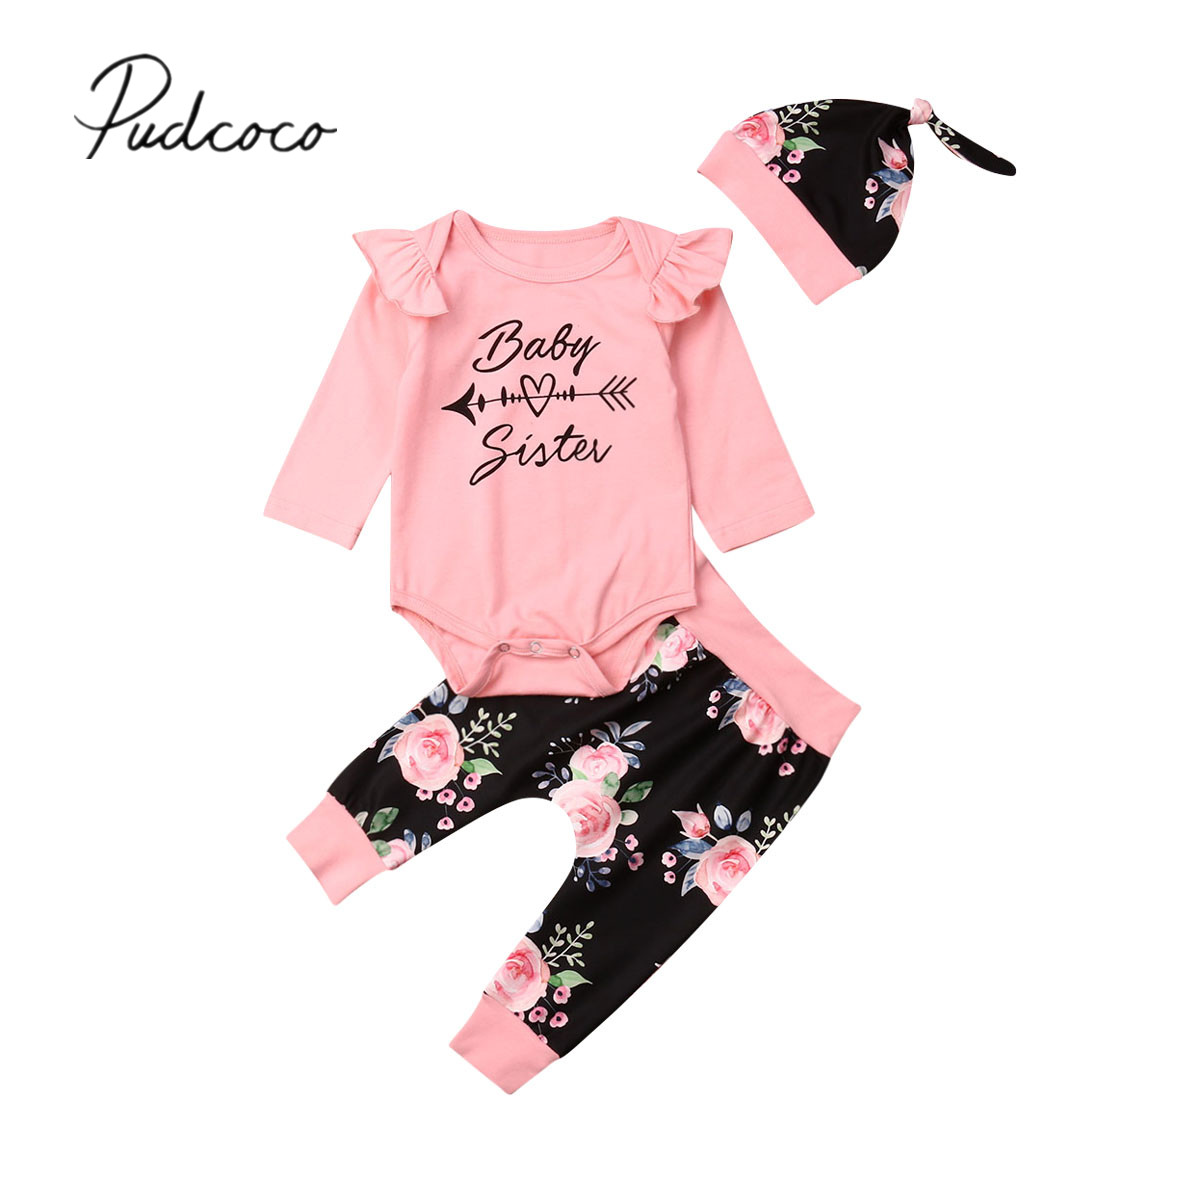 2019 Baby Autumn Winter Clothing Newborn Baby Girls Clothes Letter Romper Jumpsuit + Floral Pants Leggings 3pcs Outfit Set 0-24M